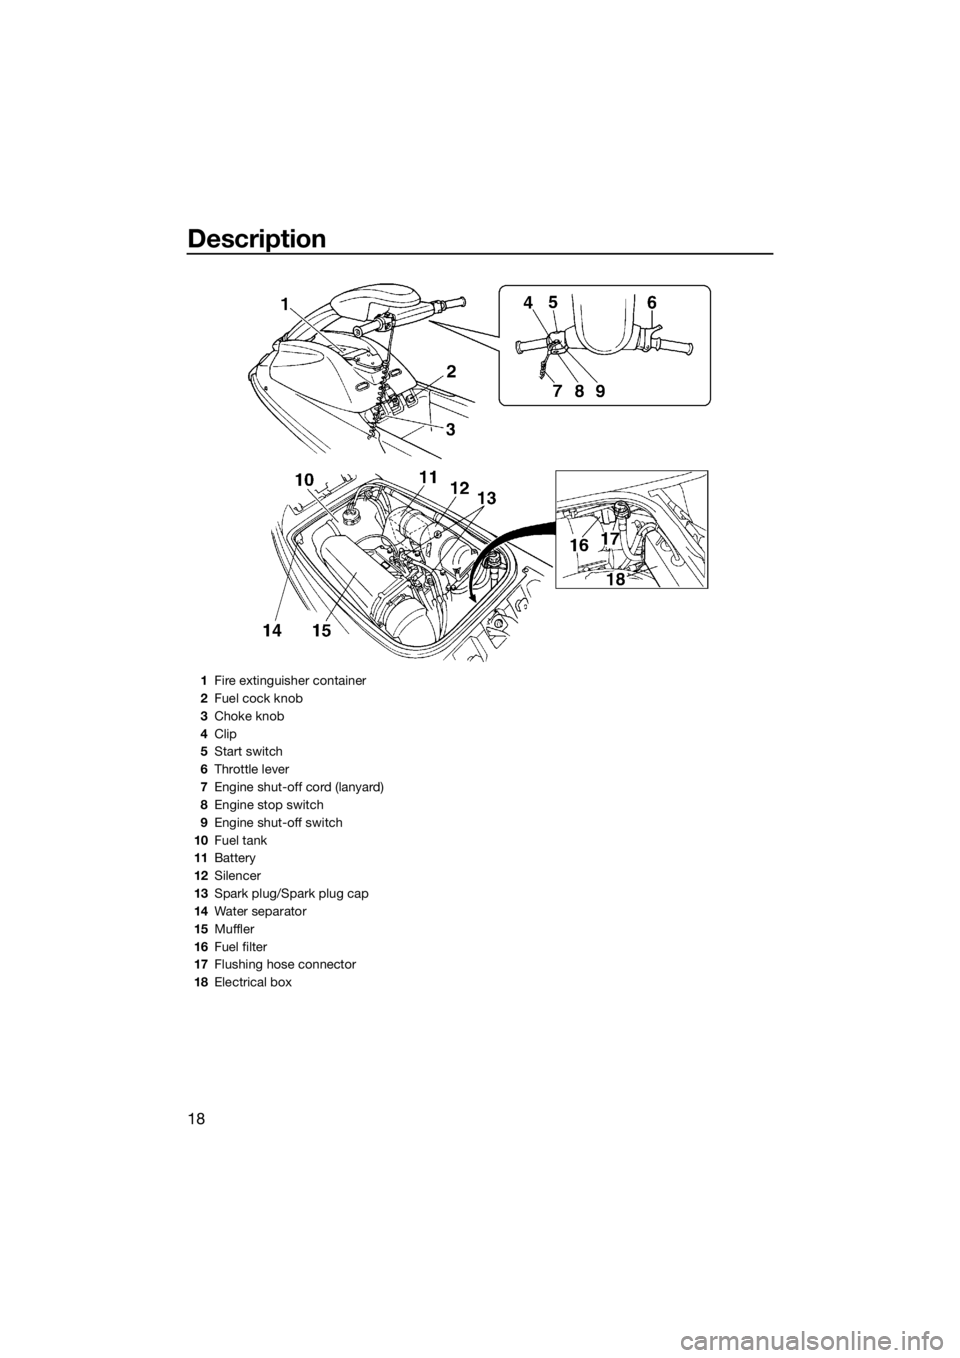 YAMAHA SUPERJET 2015  Owners Manual Description
18
1Fire extinguisher container
2 Fuel cock knob
3 Choke knob
4 Clip
5 Start switch
6 Throttle lever
7 Engine shut-off cord (lanyard)
8 Engine stop switch
9 Engine shut-off switch
10 Fuel 